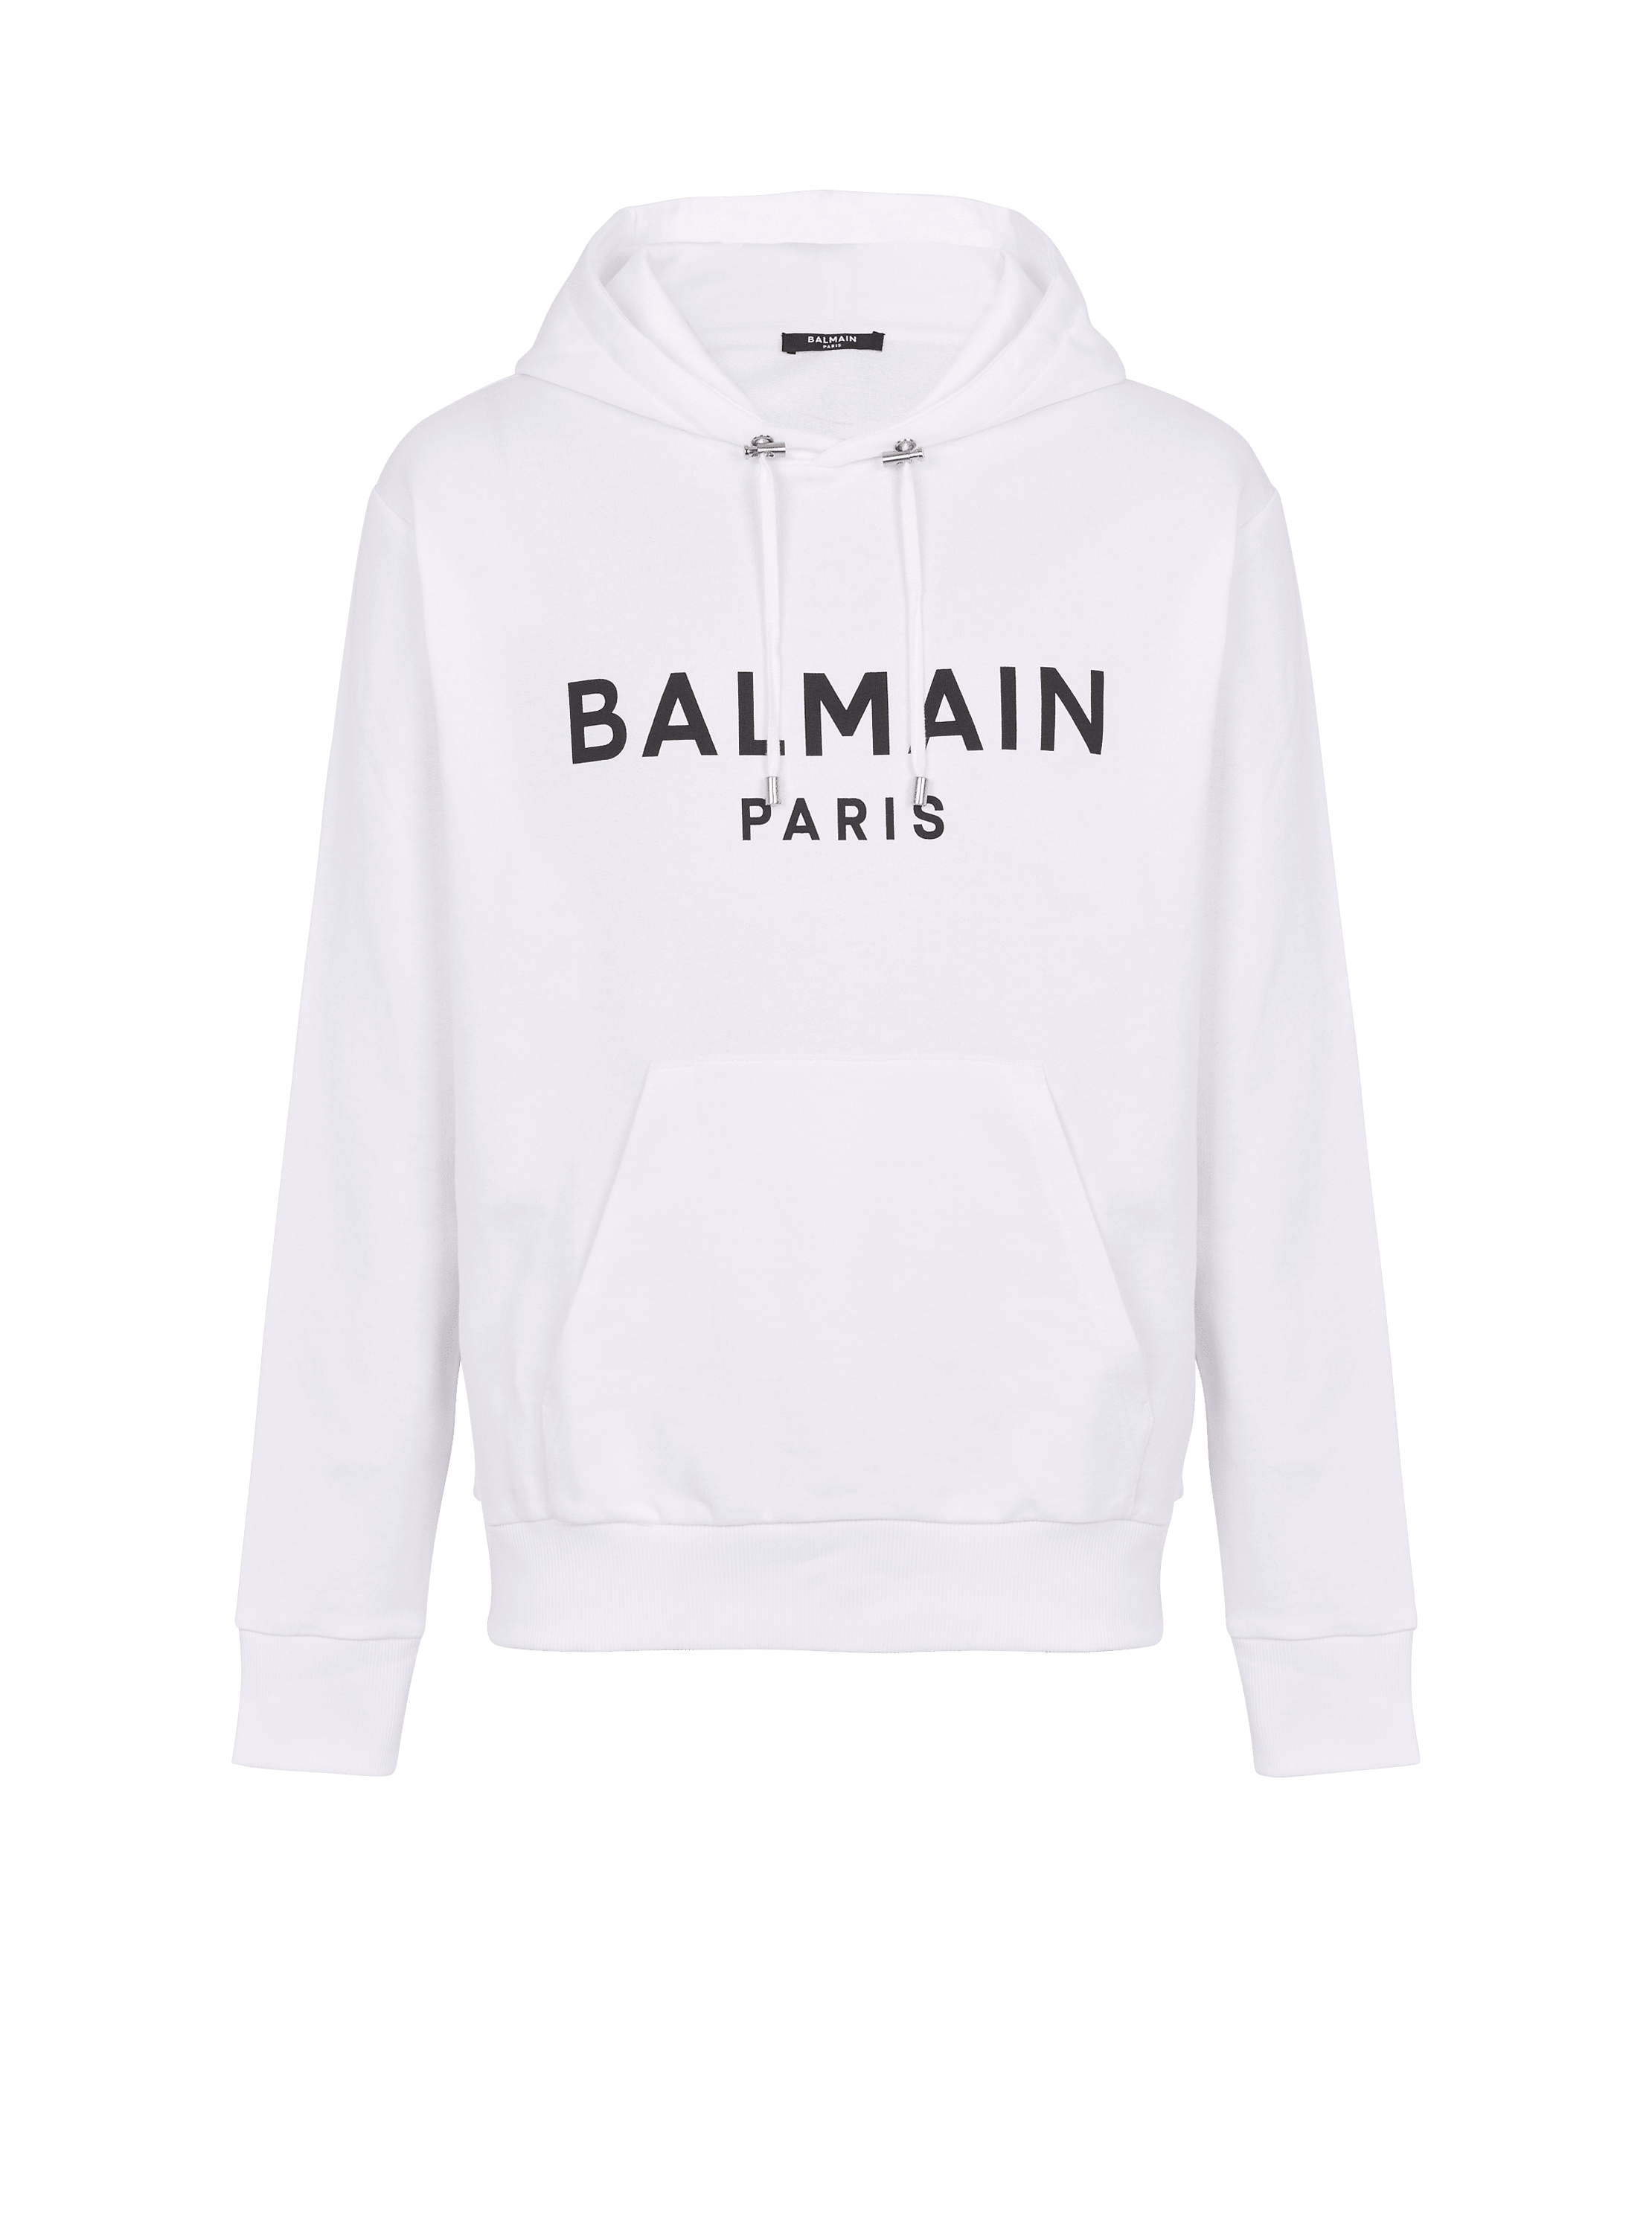 Balmain Paris hooded sweatshirt - Men BALMAIN